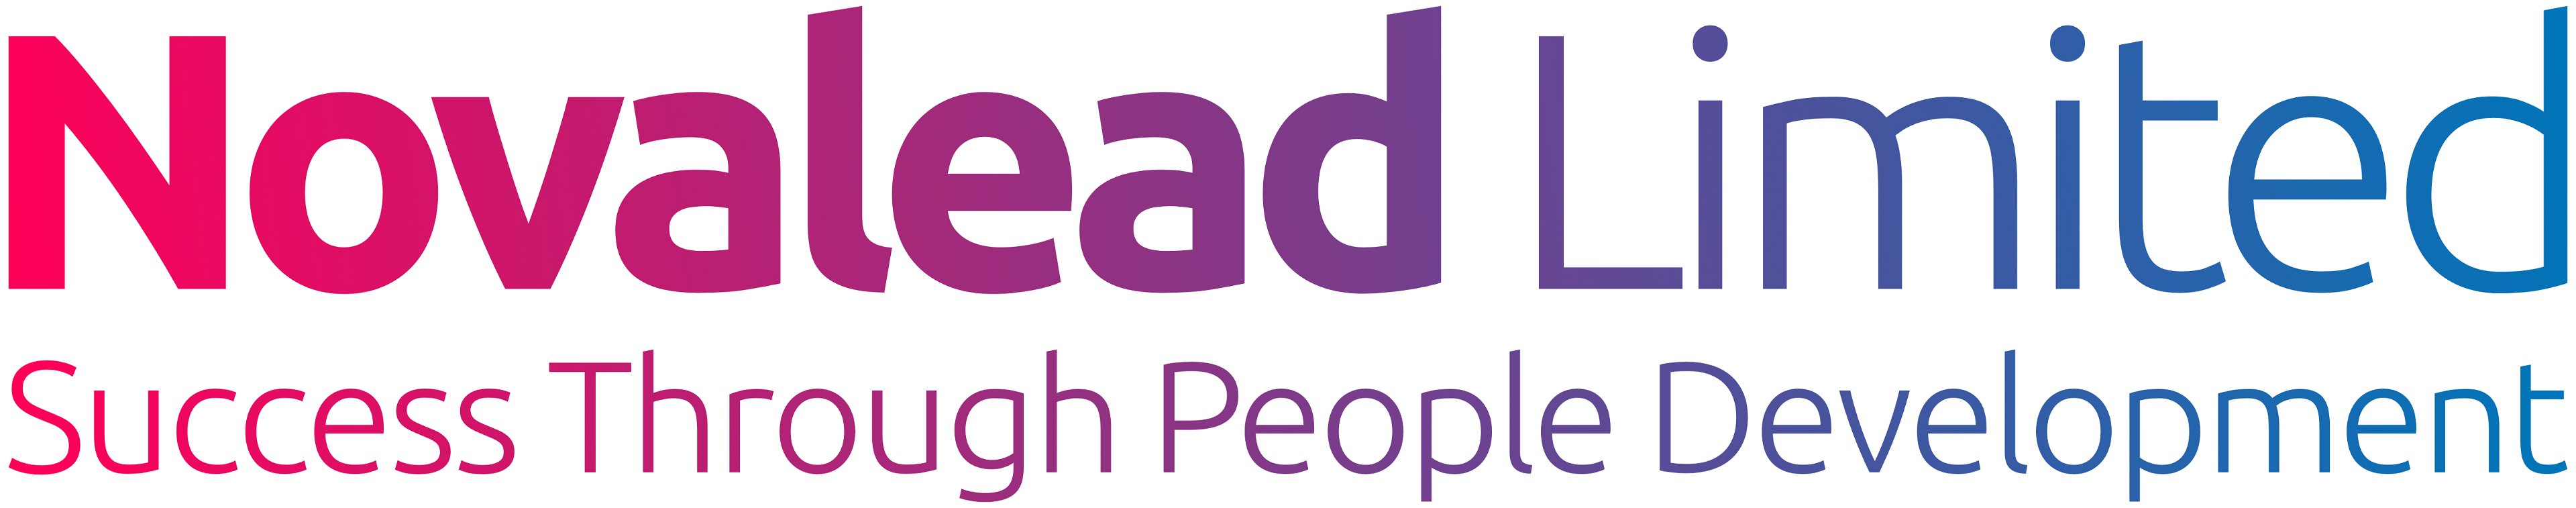 Novalead Limited Success Through People Development logo